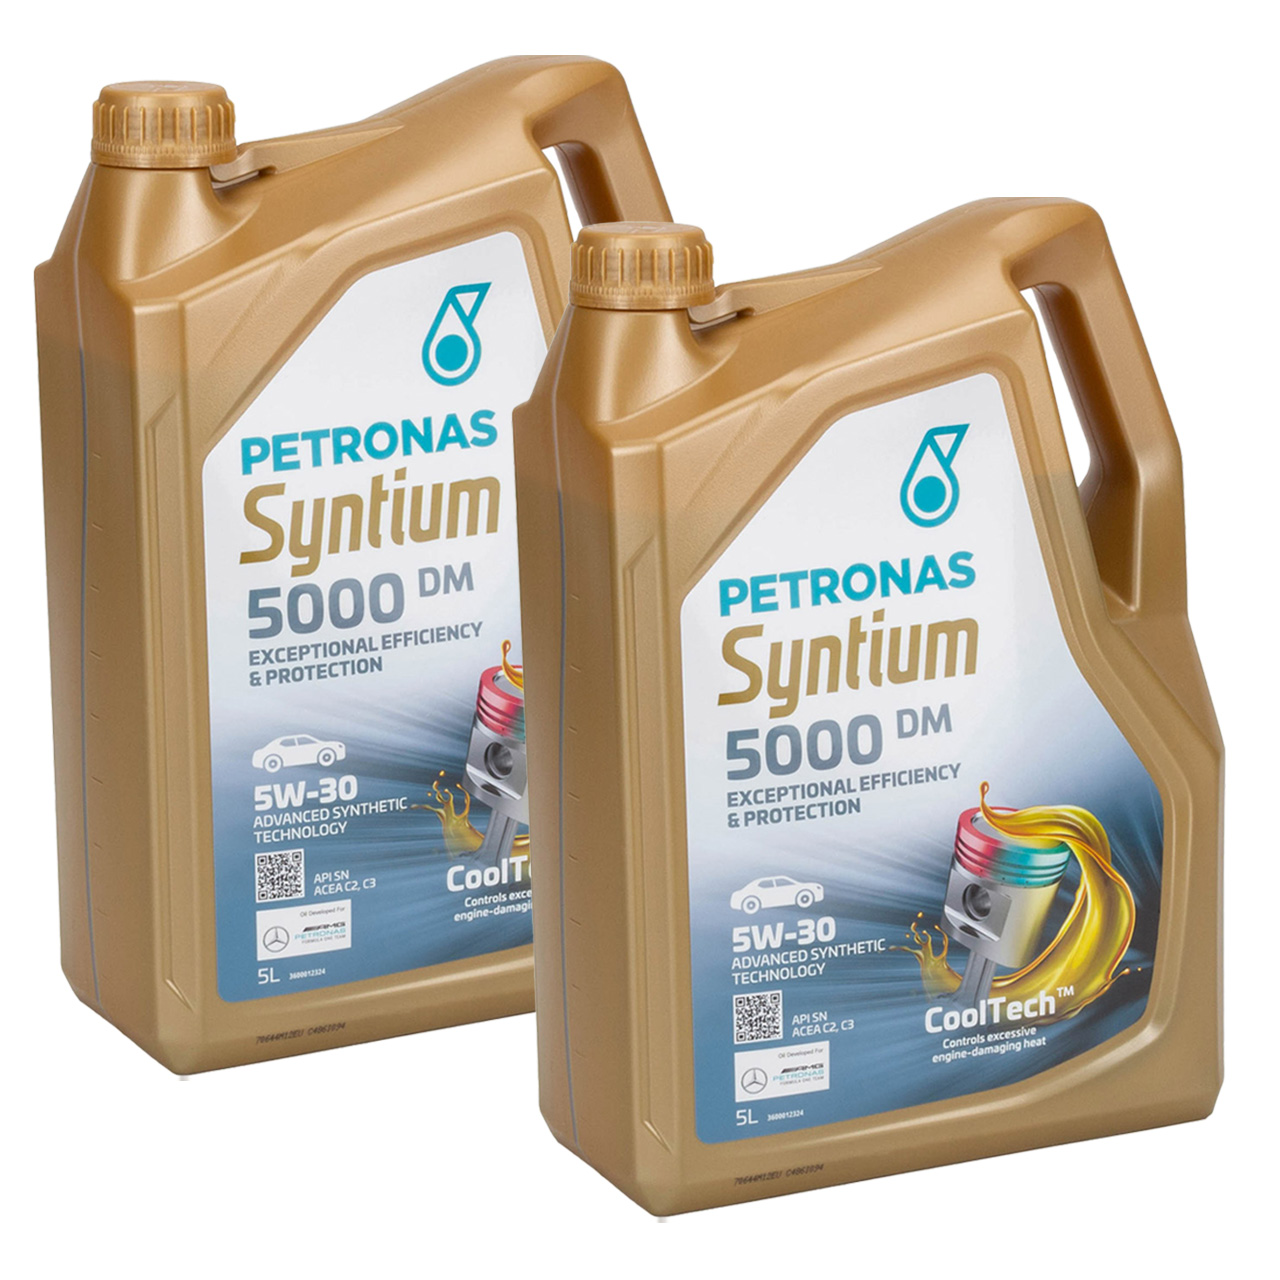 10L 10 Liter PETRONAS Syntium 5000 DM 5W-30 Motoröl Öl BMW LL-04 MB 229.51/52 VW 505.00/01